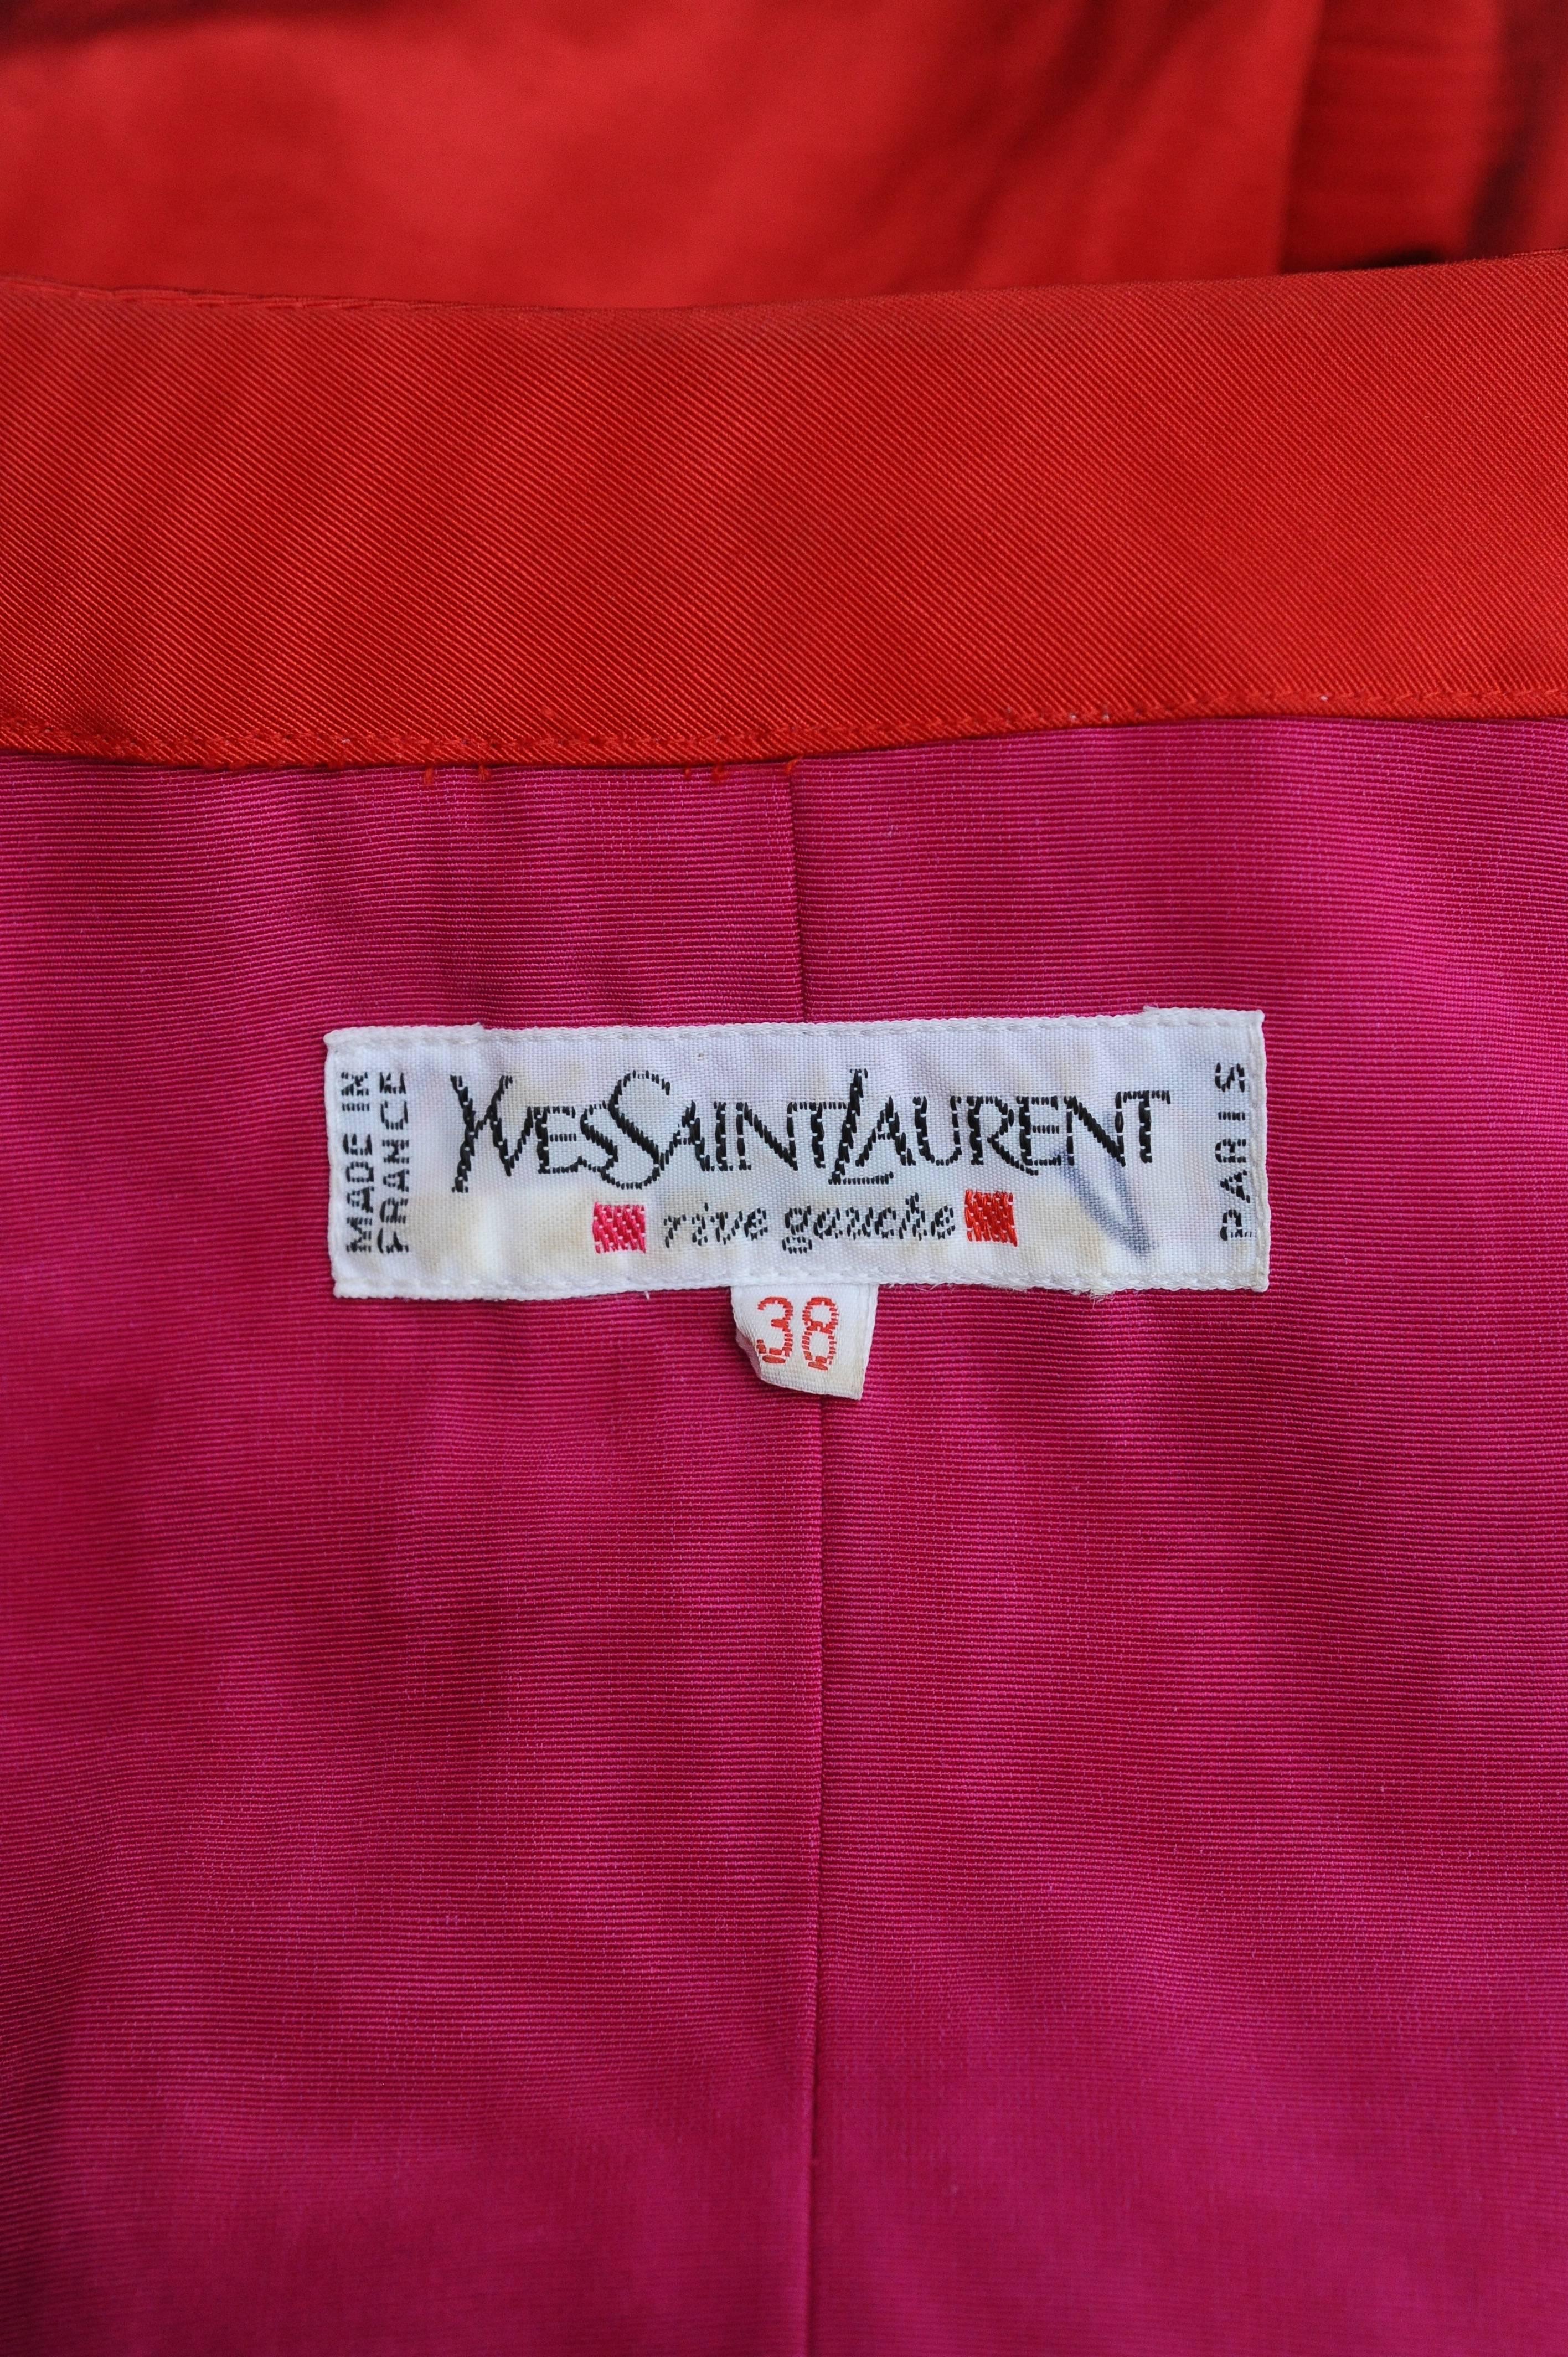 Yves Saint Laurent Rive Gauche red and black skirt set 3